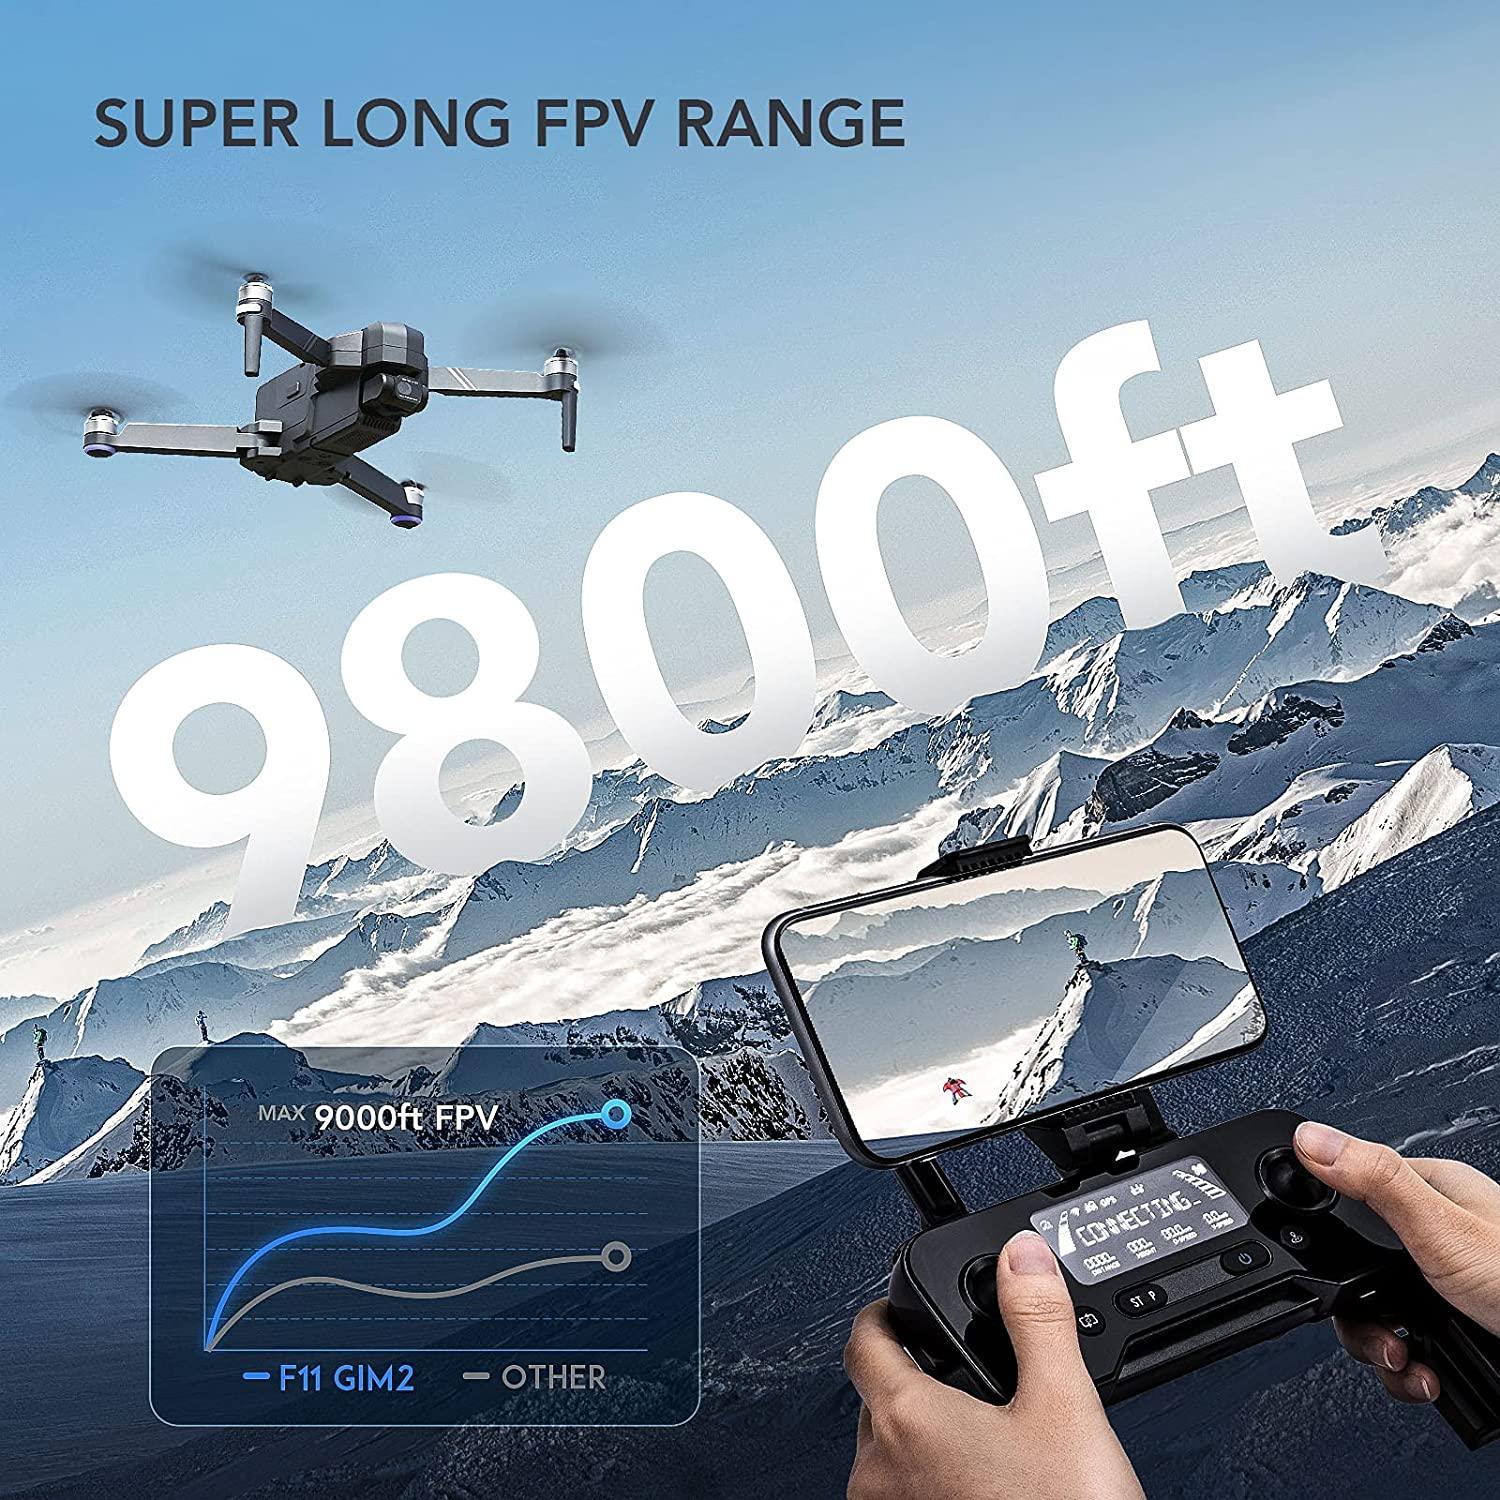 Ruko F11 Series Drone Blades Propellers for F11GIM/F11GIM2 Drone  Accessories